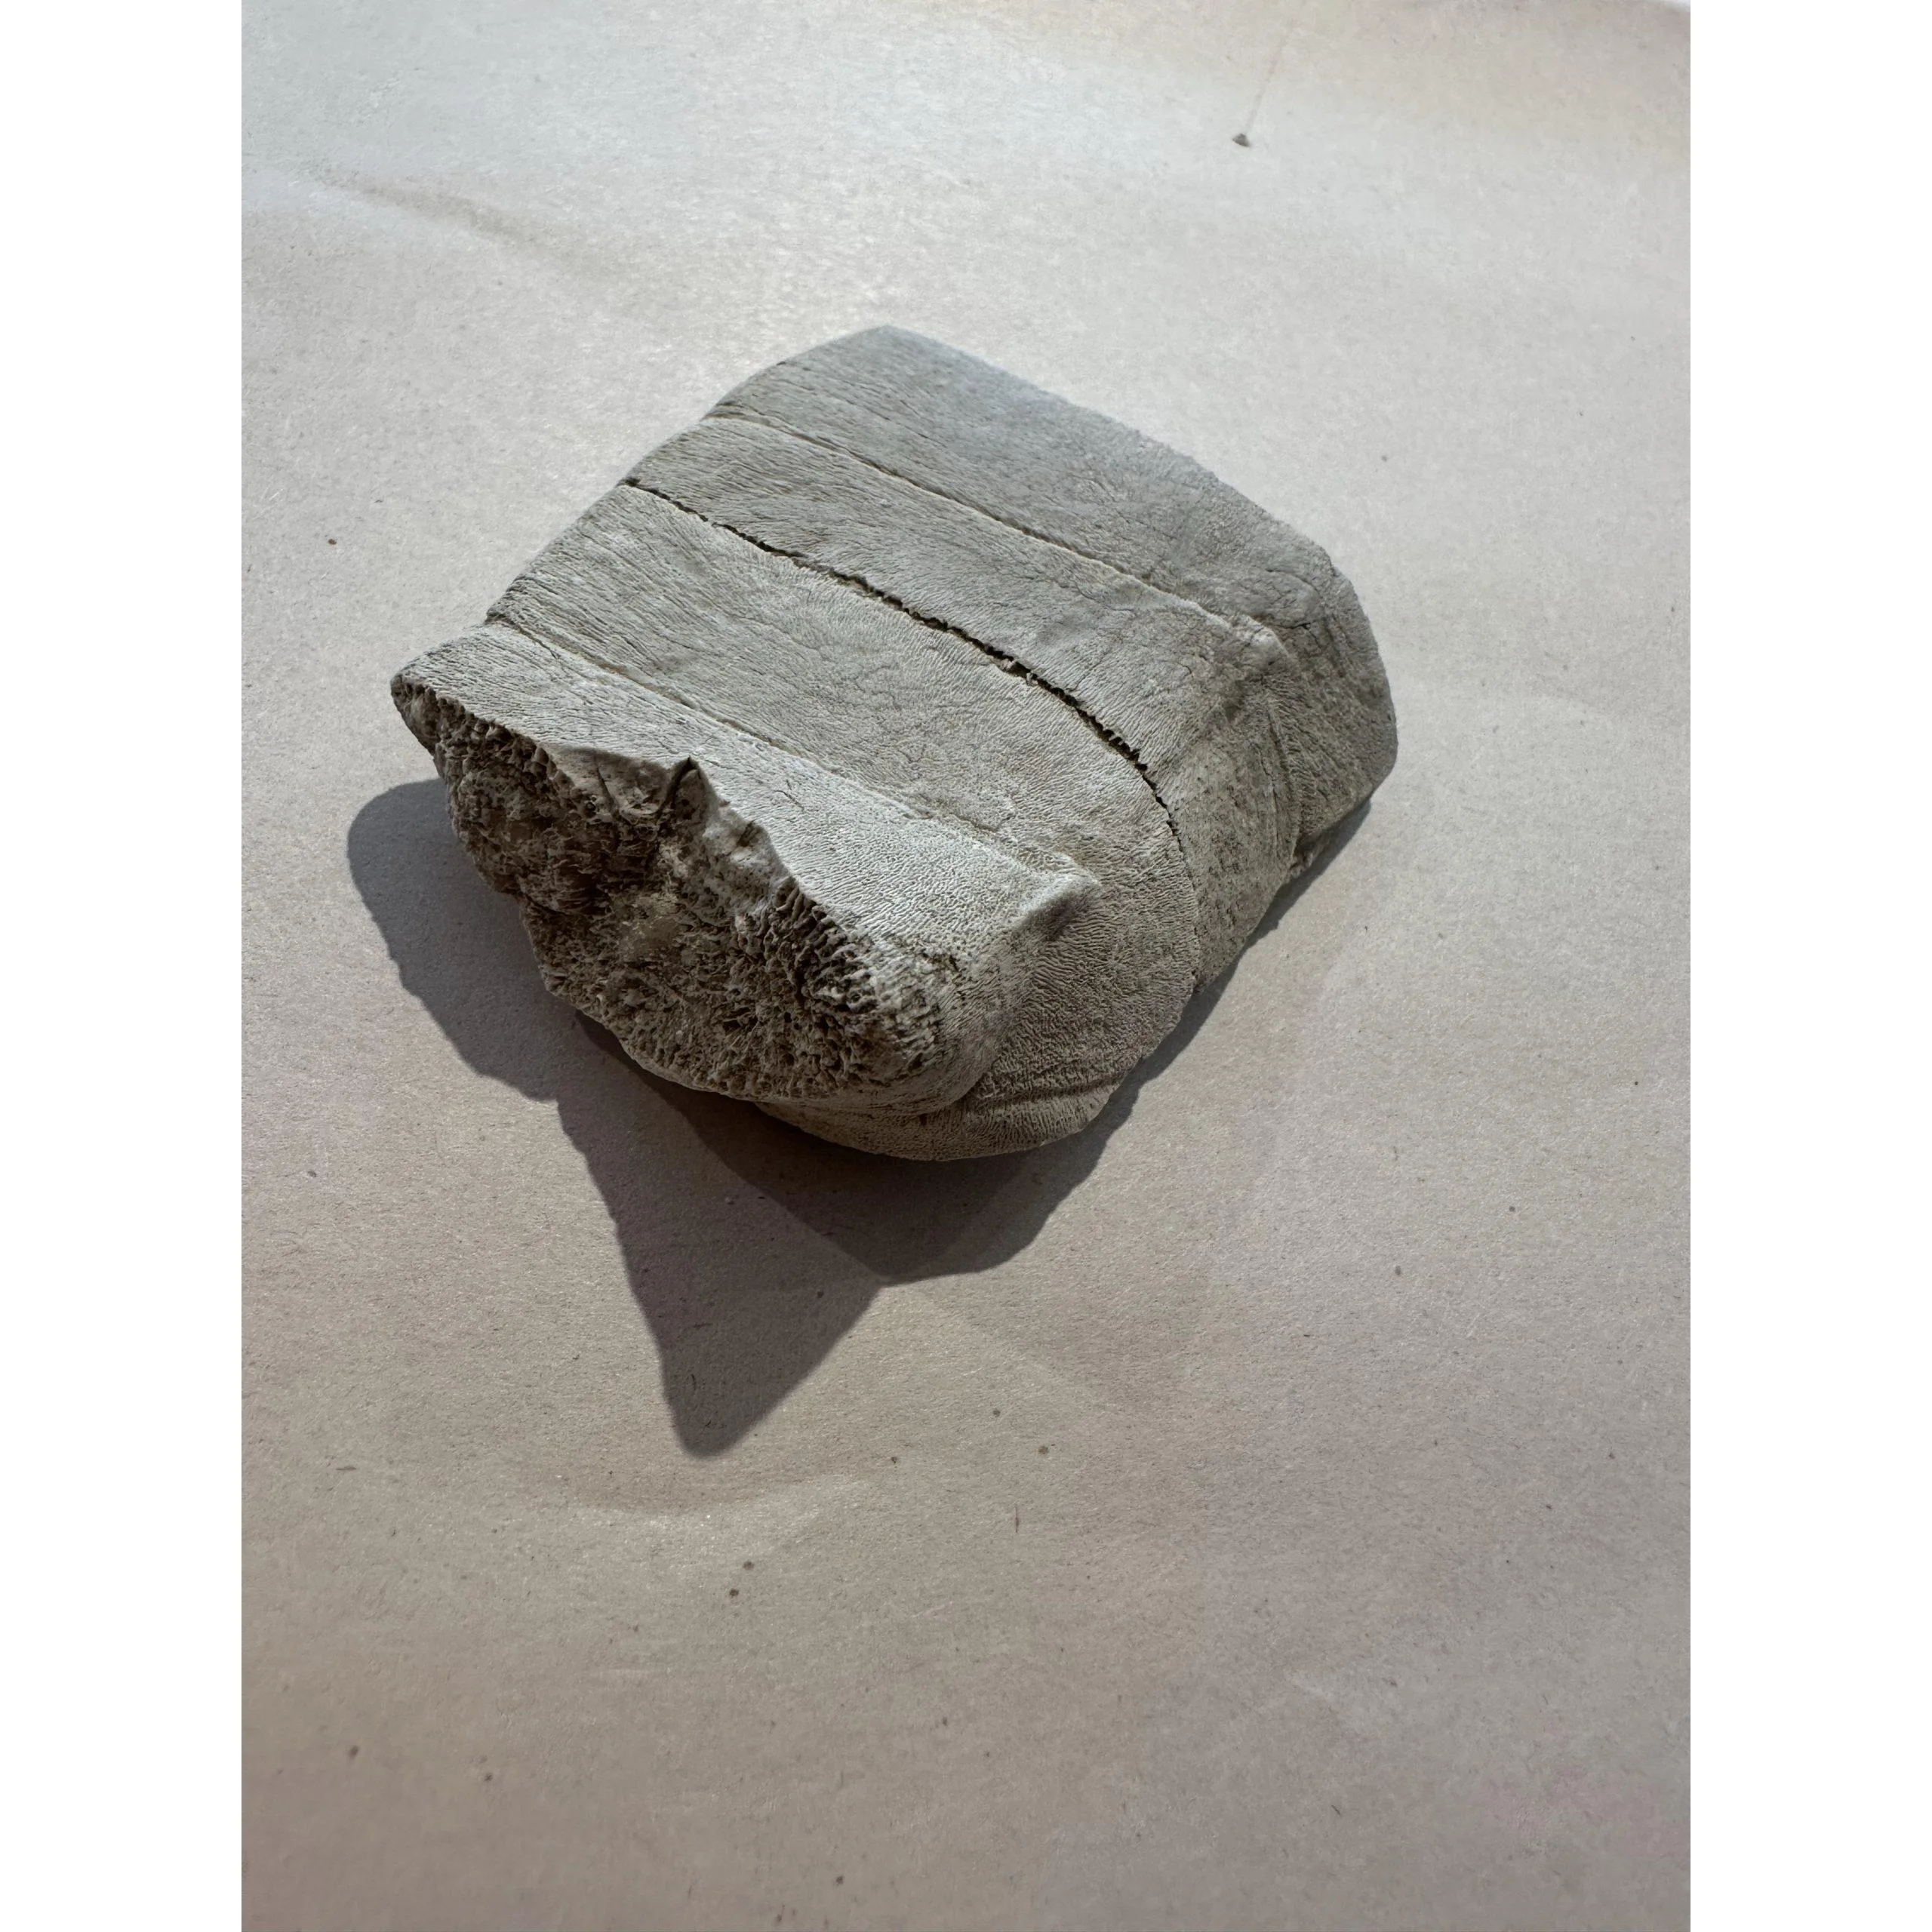 fossil Turtle shell section, Oligocene age Prehistoric Online